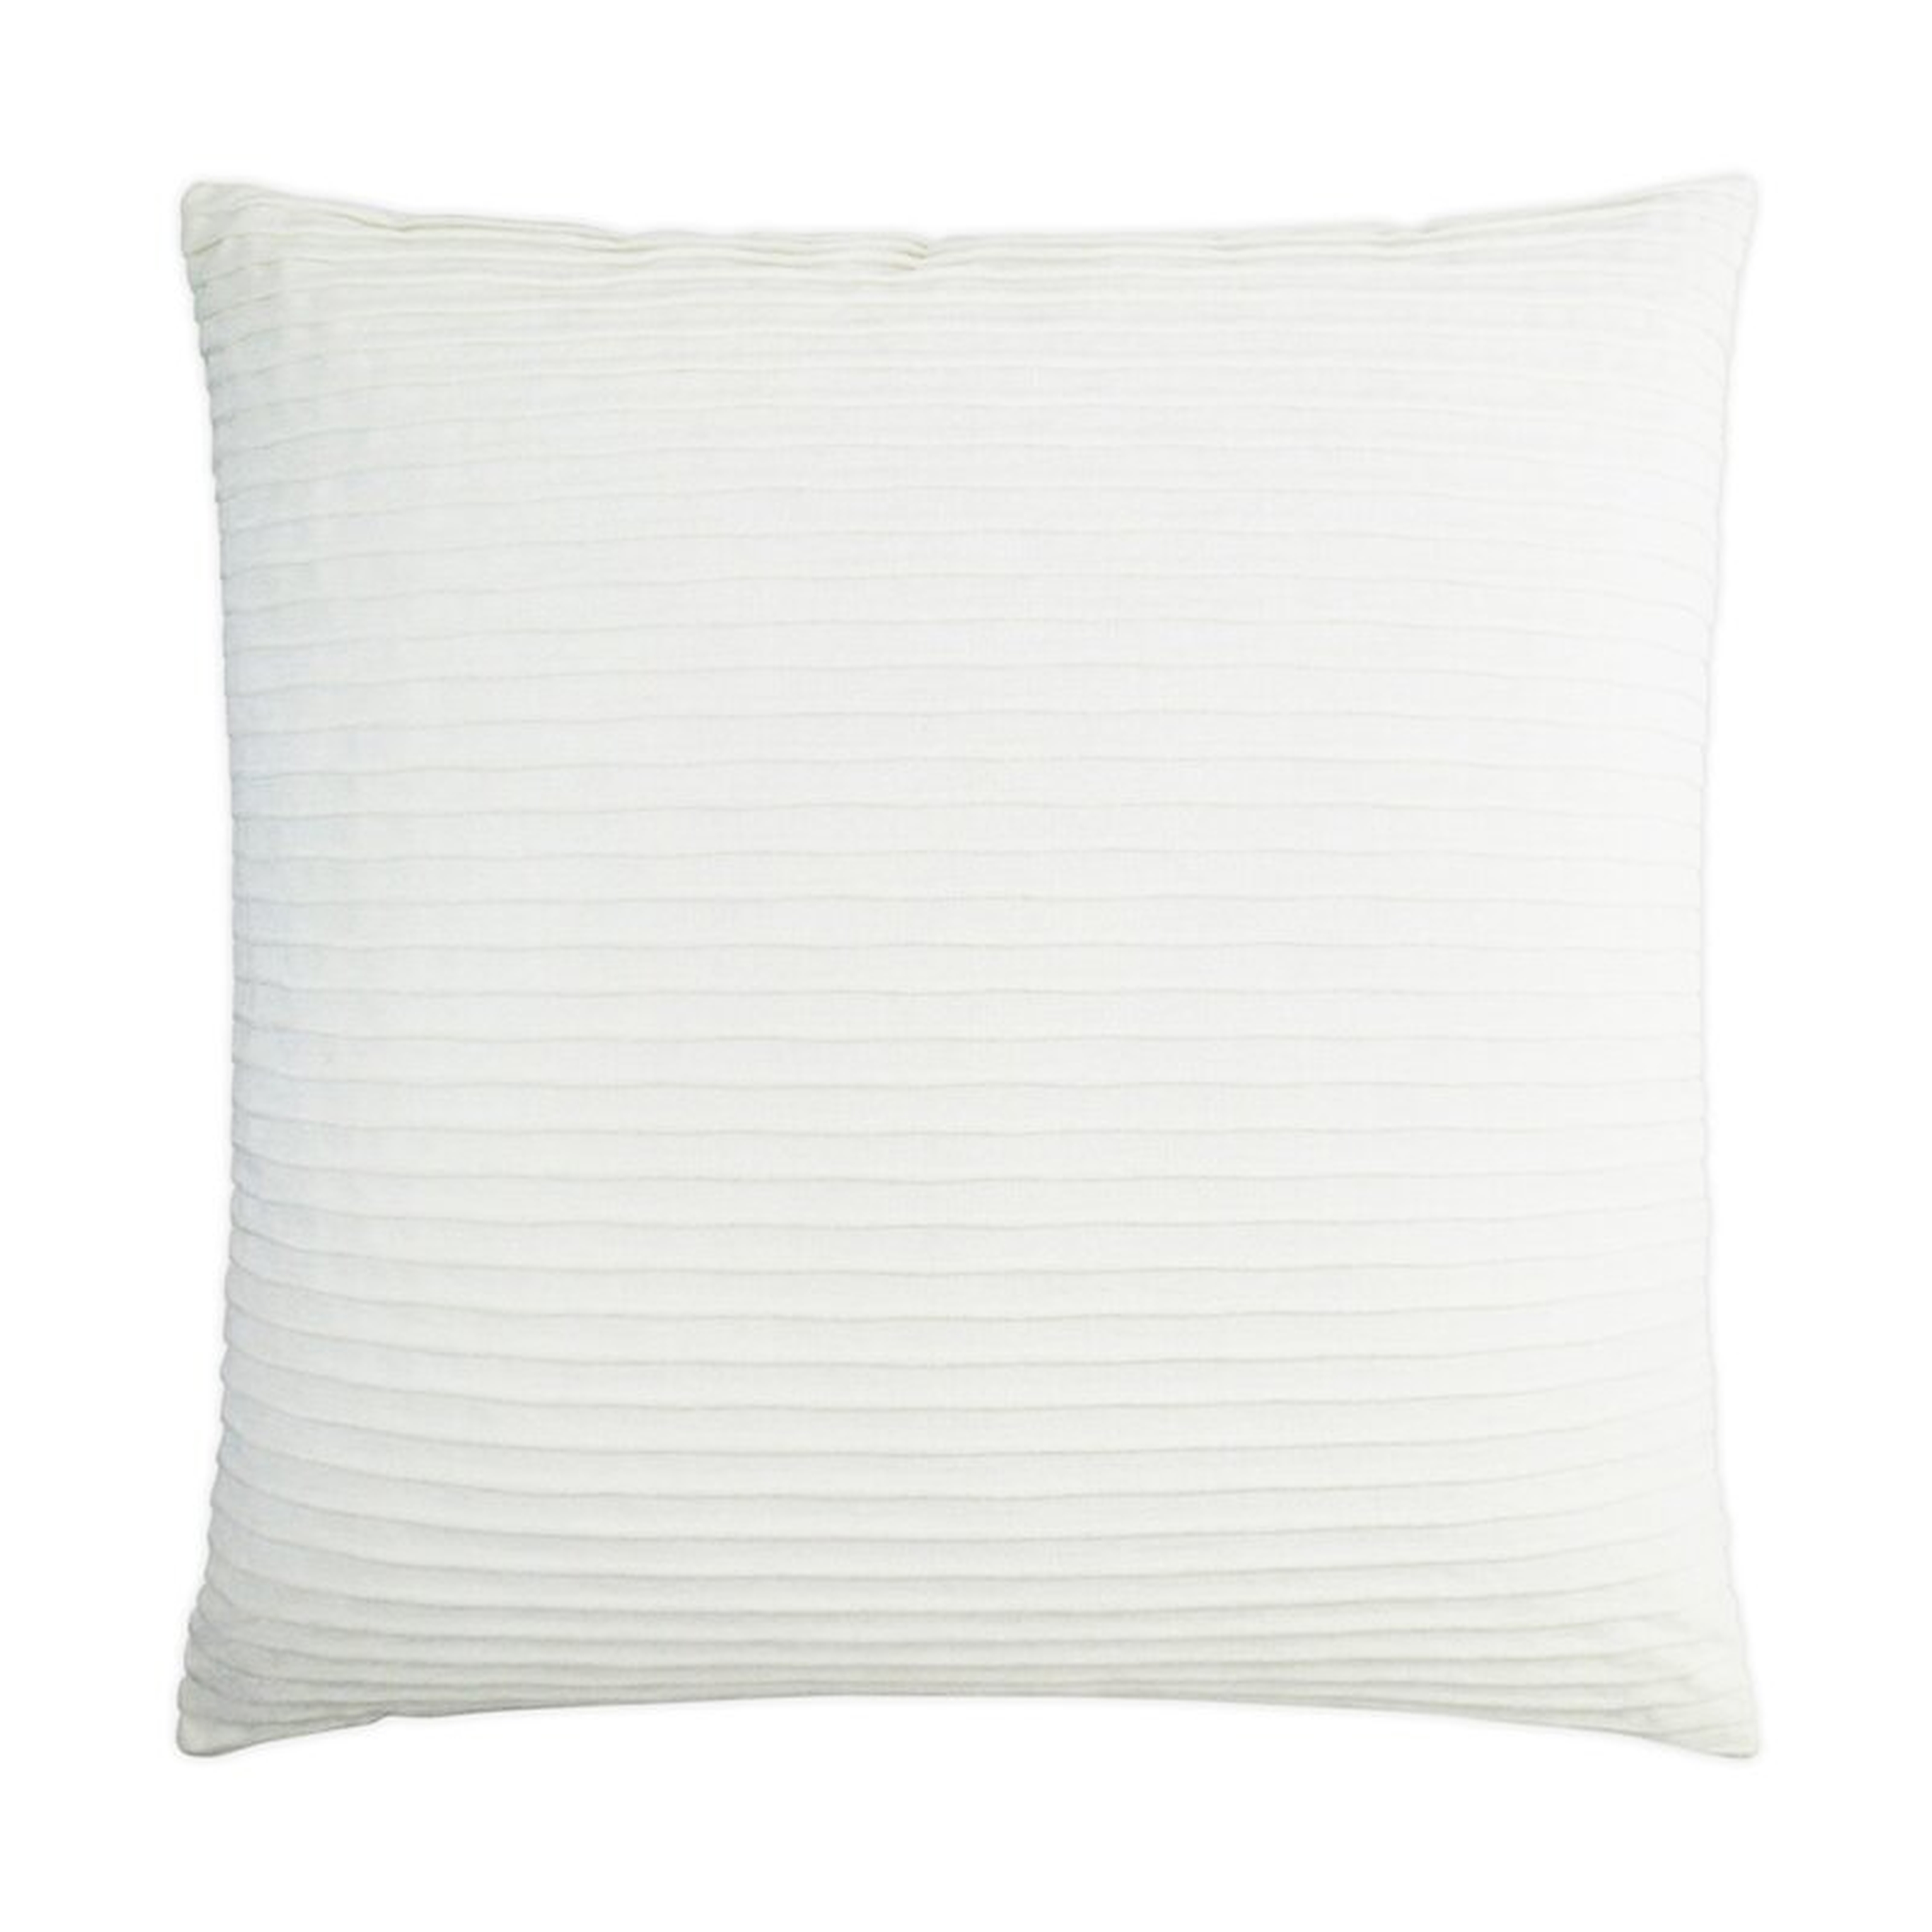 D.V. Kap Throw Pillow Color: White - Perigold